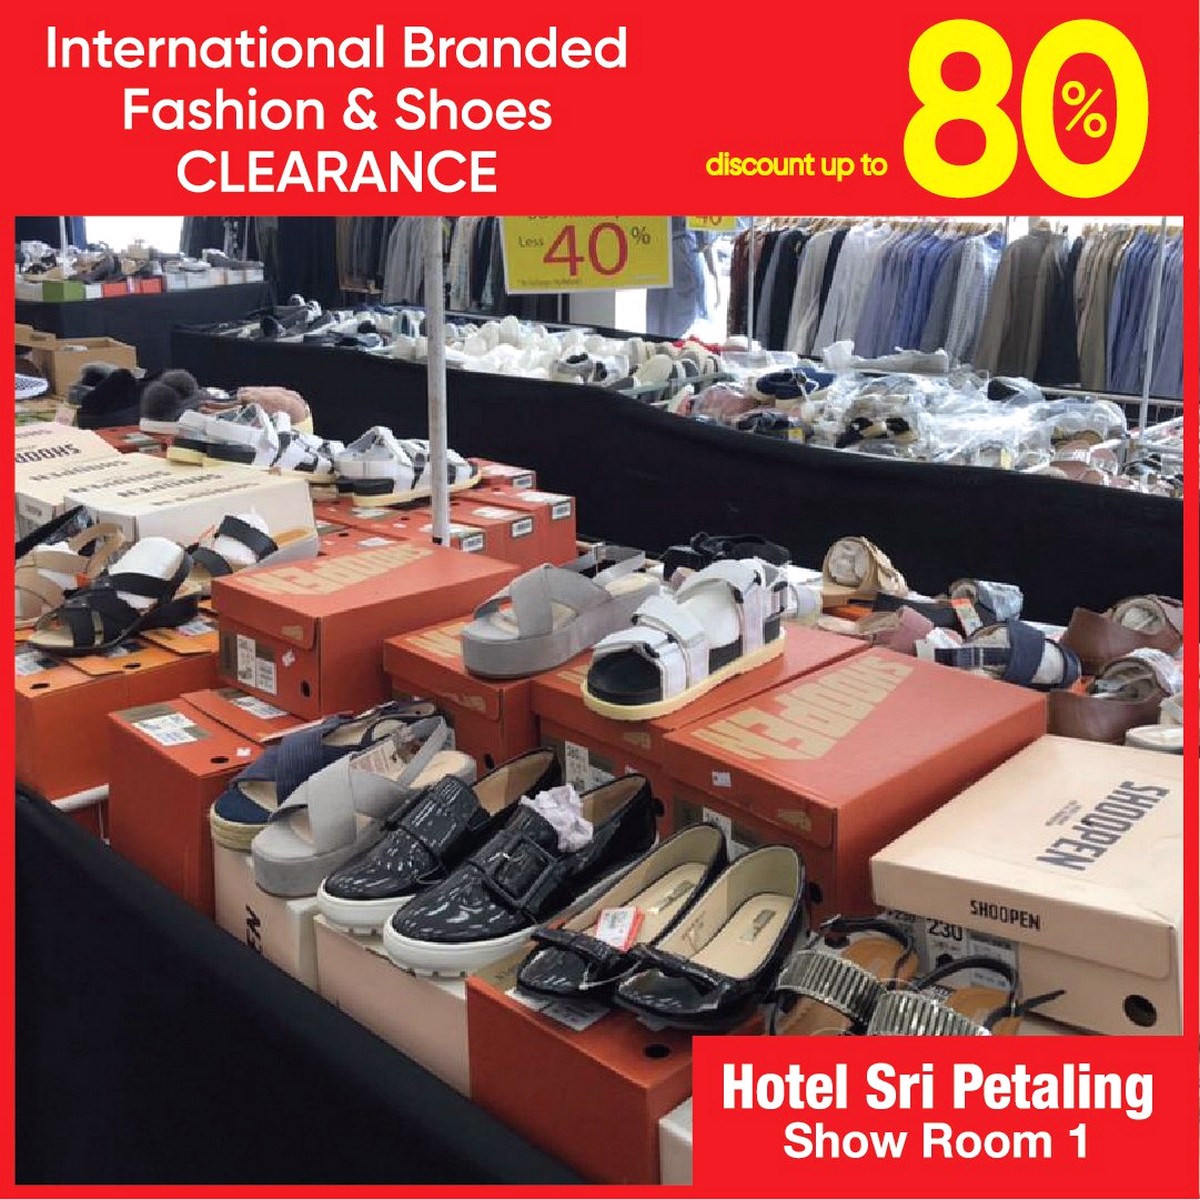 Hotel-Sri-Petaling-Warehouse-Sale-2021-8 - Apparels Fashion Accessories Fashion Lifestyle & Department Store Kuala Lumpur Selangor Warehouse Sale & Clearance in Malaysia 